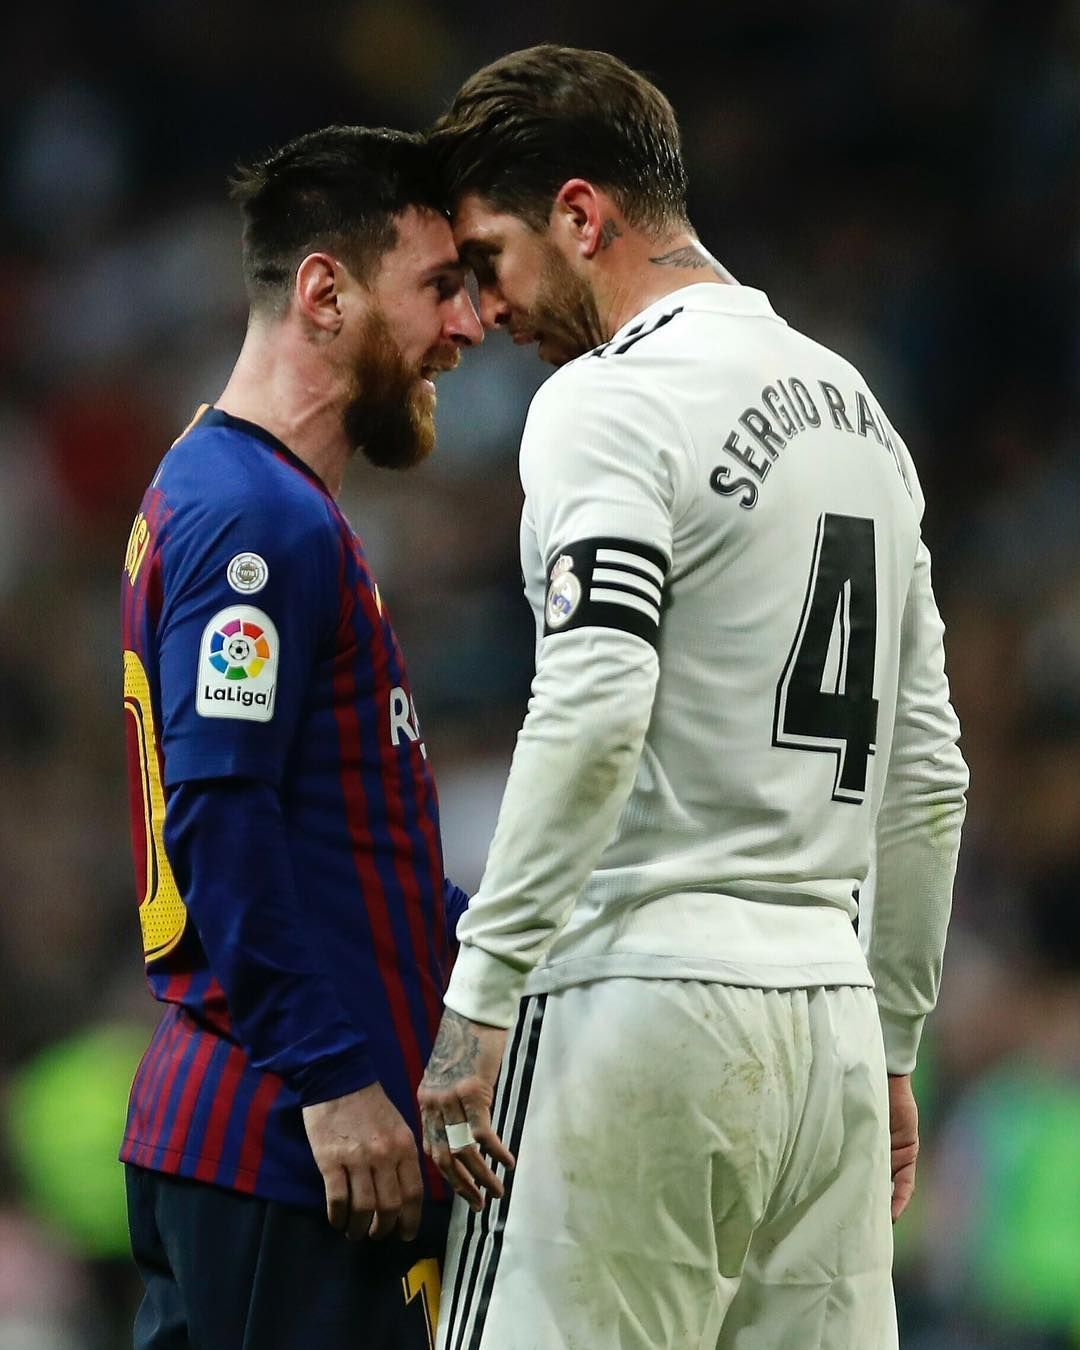 Messi & Ramos squaring up. Messi has a lot of balls